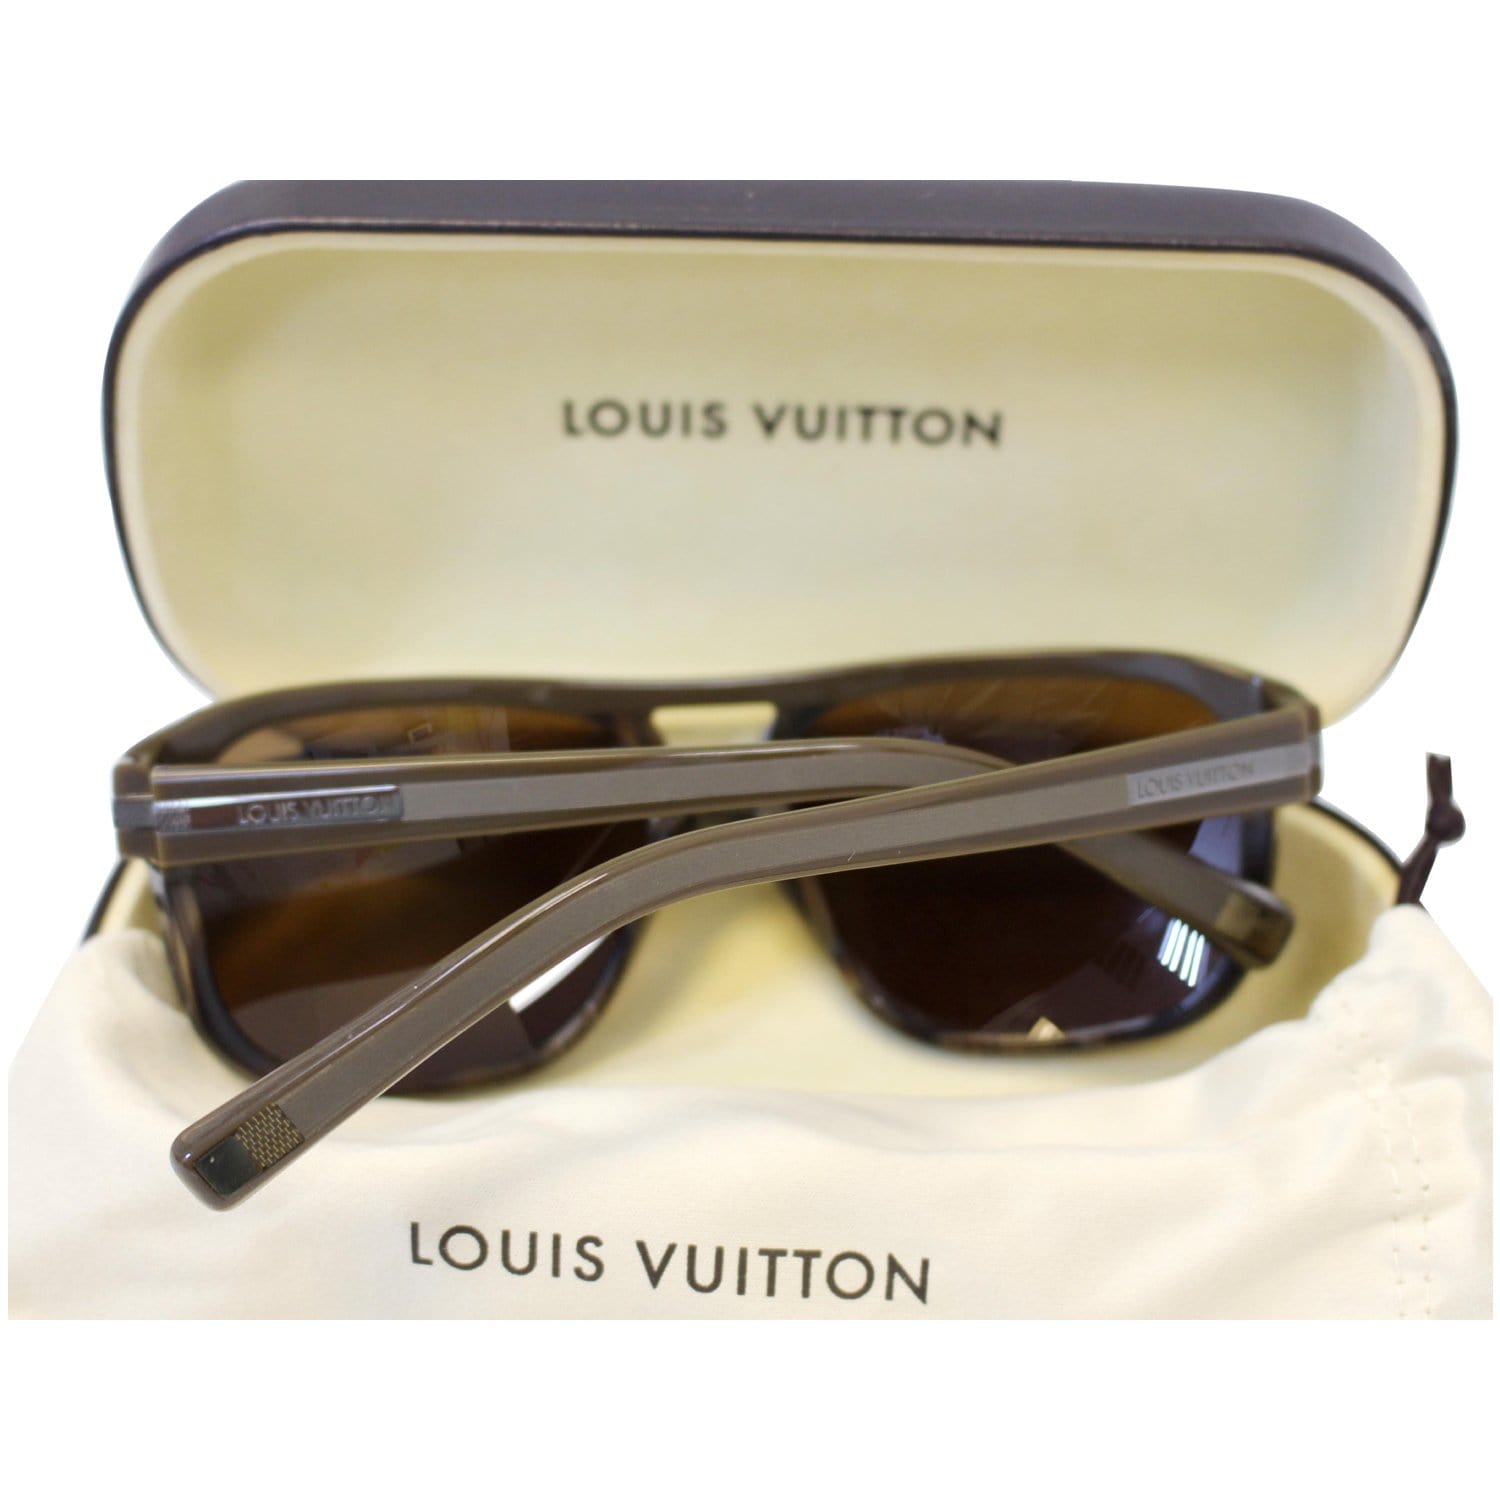 Sunglasses Louis Vuitton מוצרי תינוקות - פשוט לקנות בזיפי